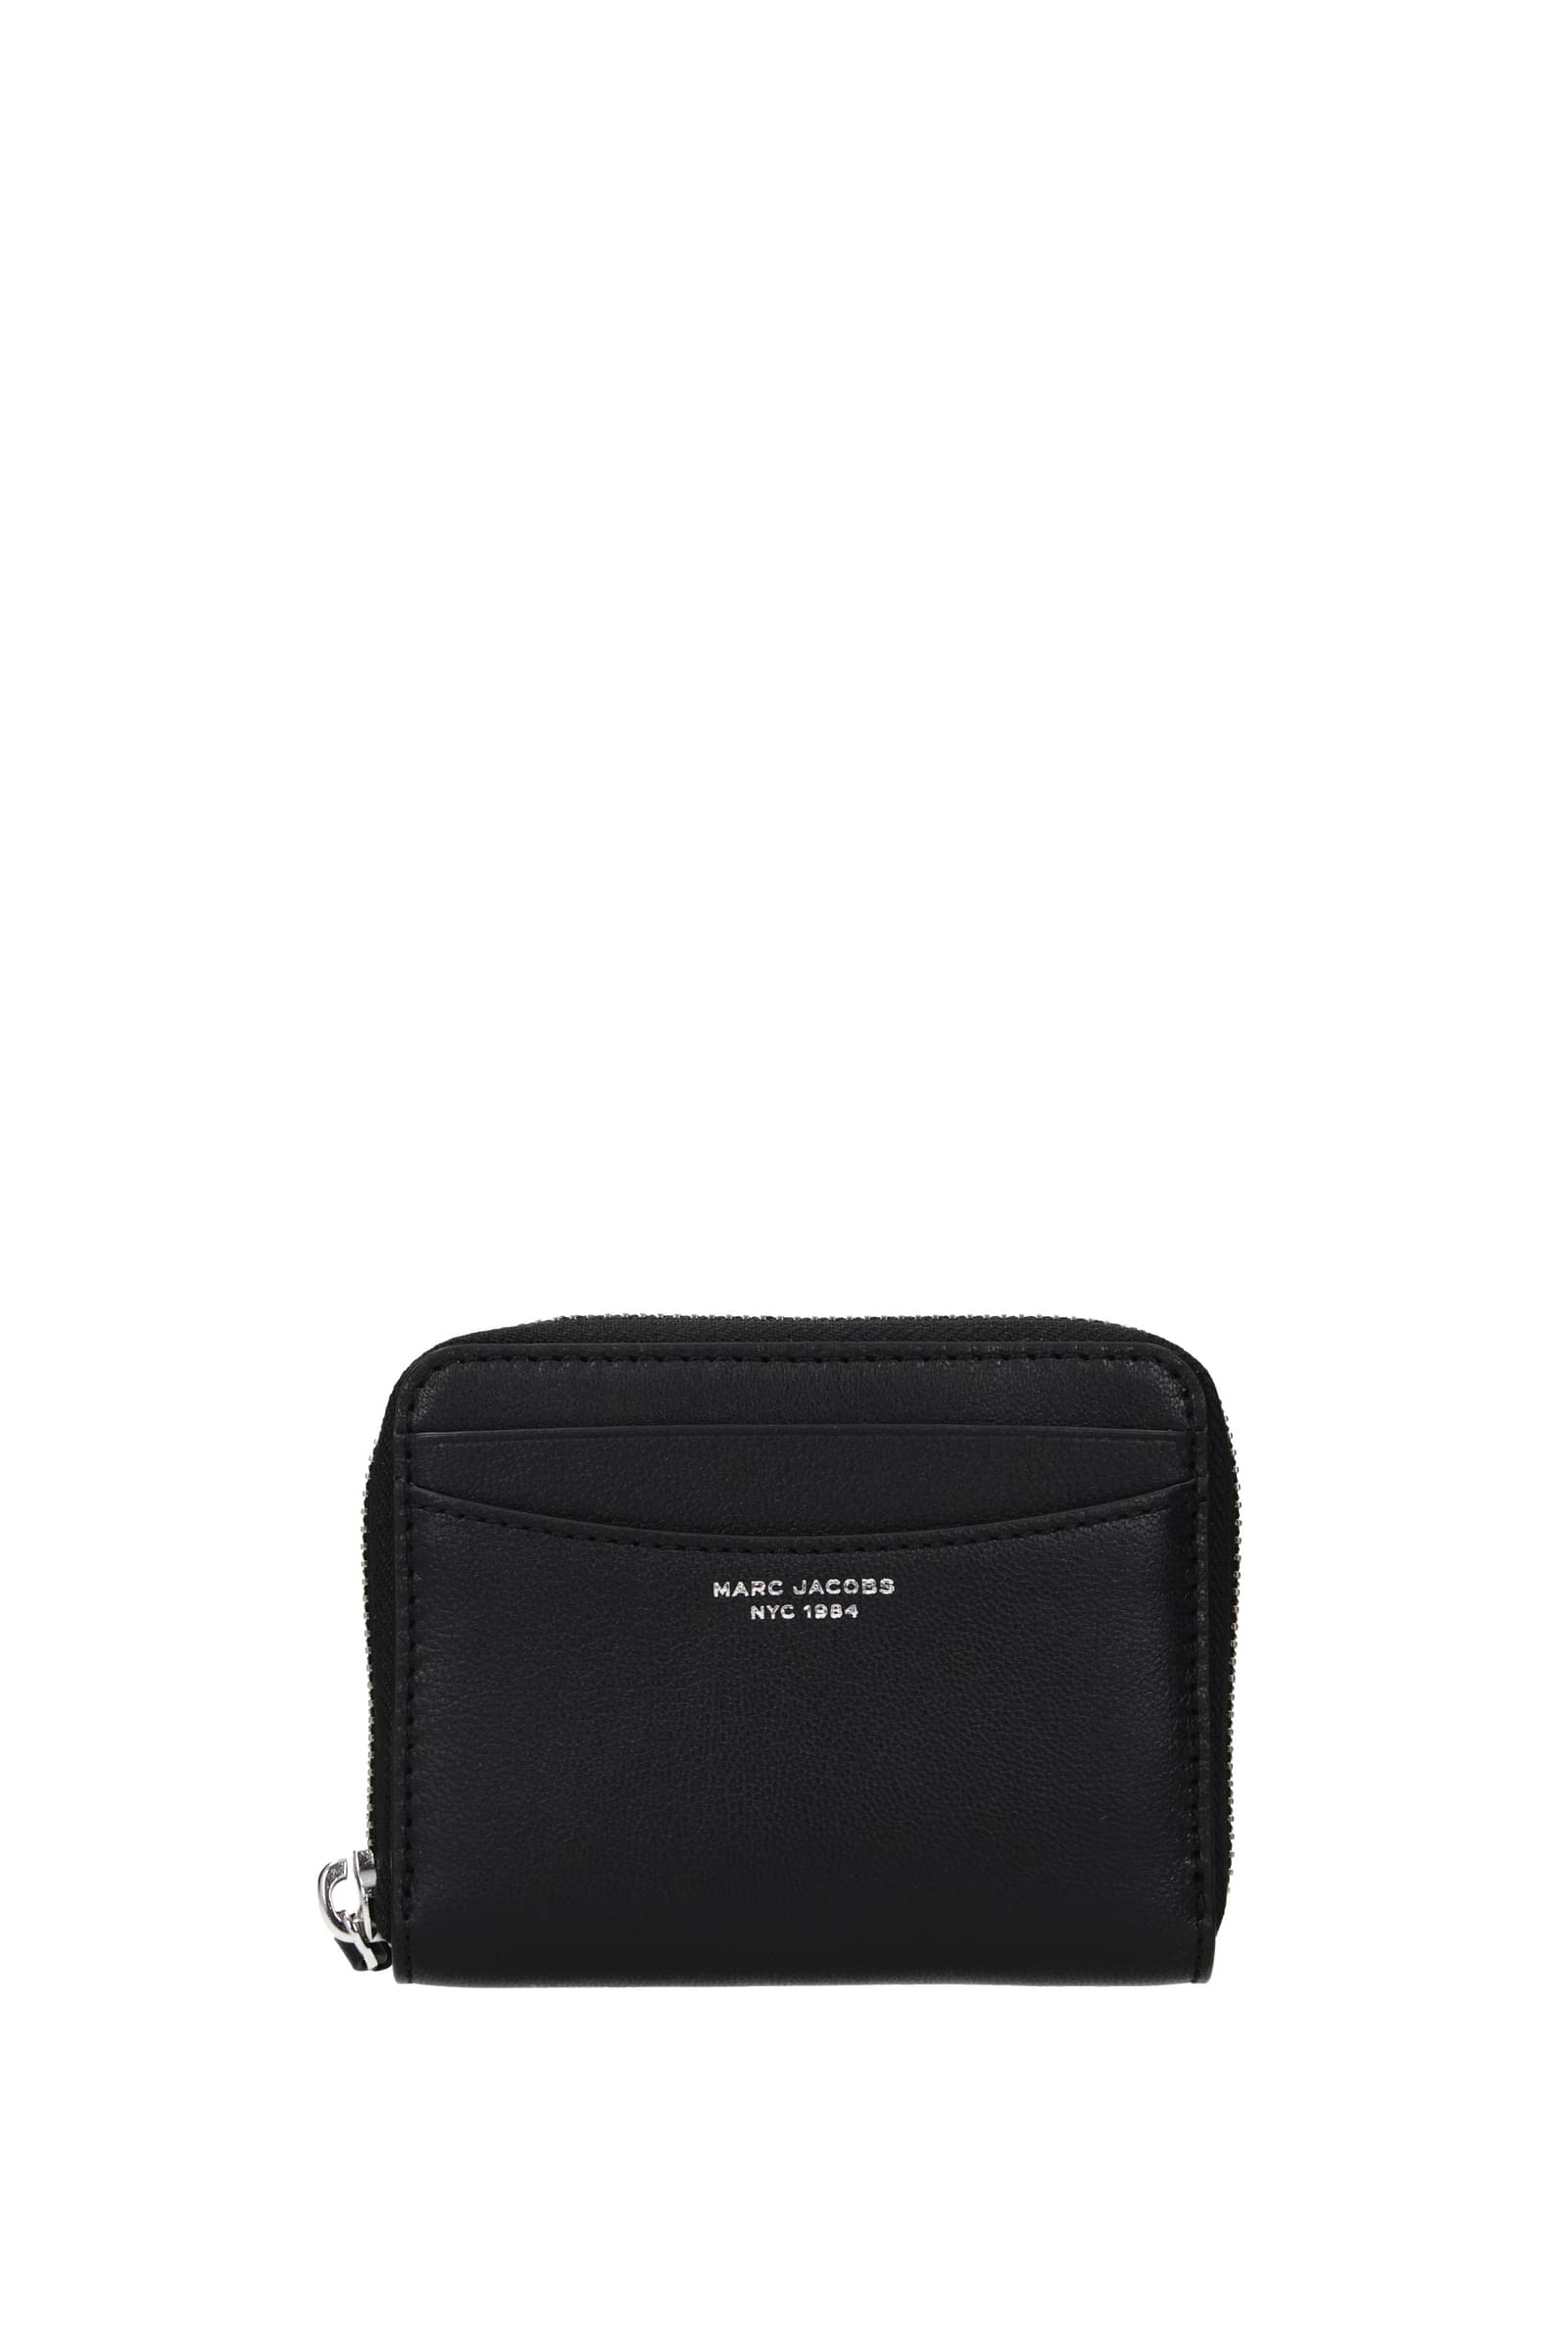 Marc Jacobs Leather Argan Oil Mini Compact Wallet – Gerry McGuire's